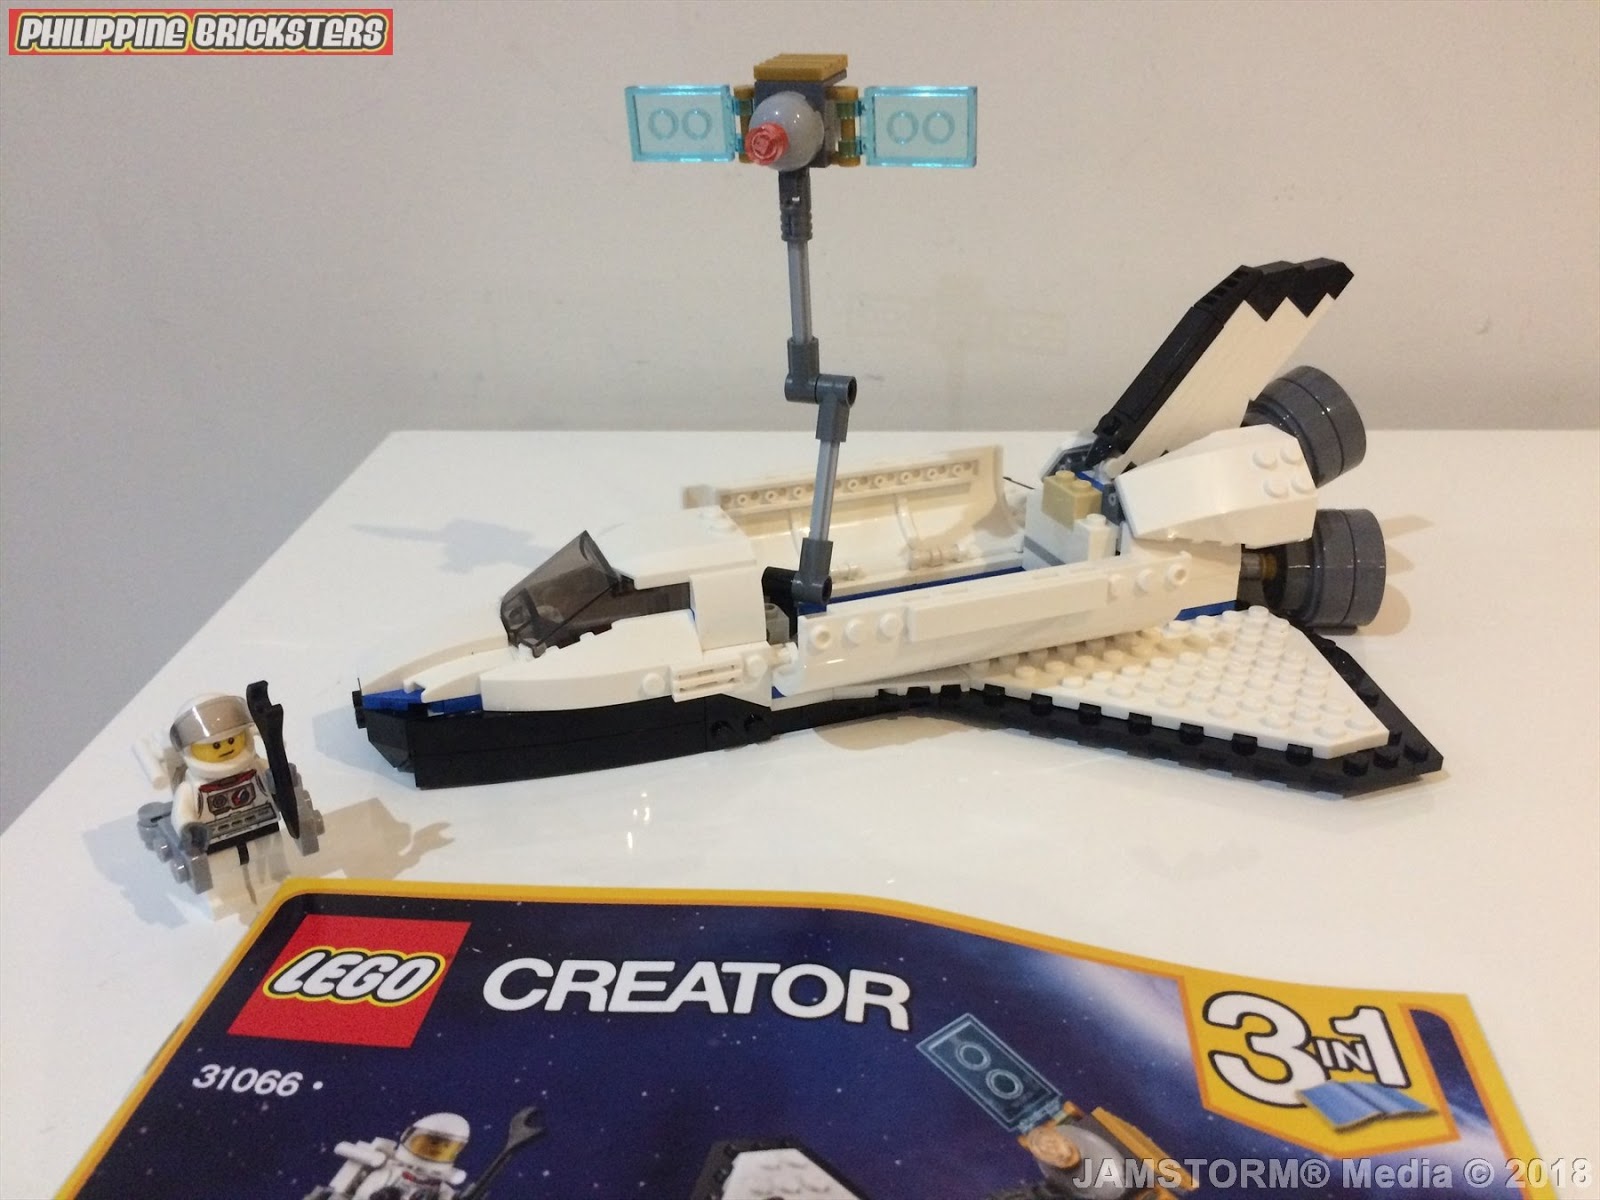 LEGO Astronaut Minifigure with Jetpack 31066 Space Shuttle Explorer